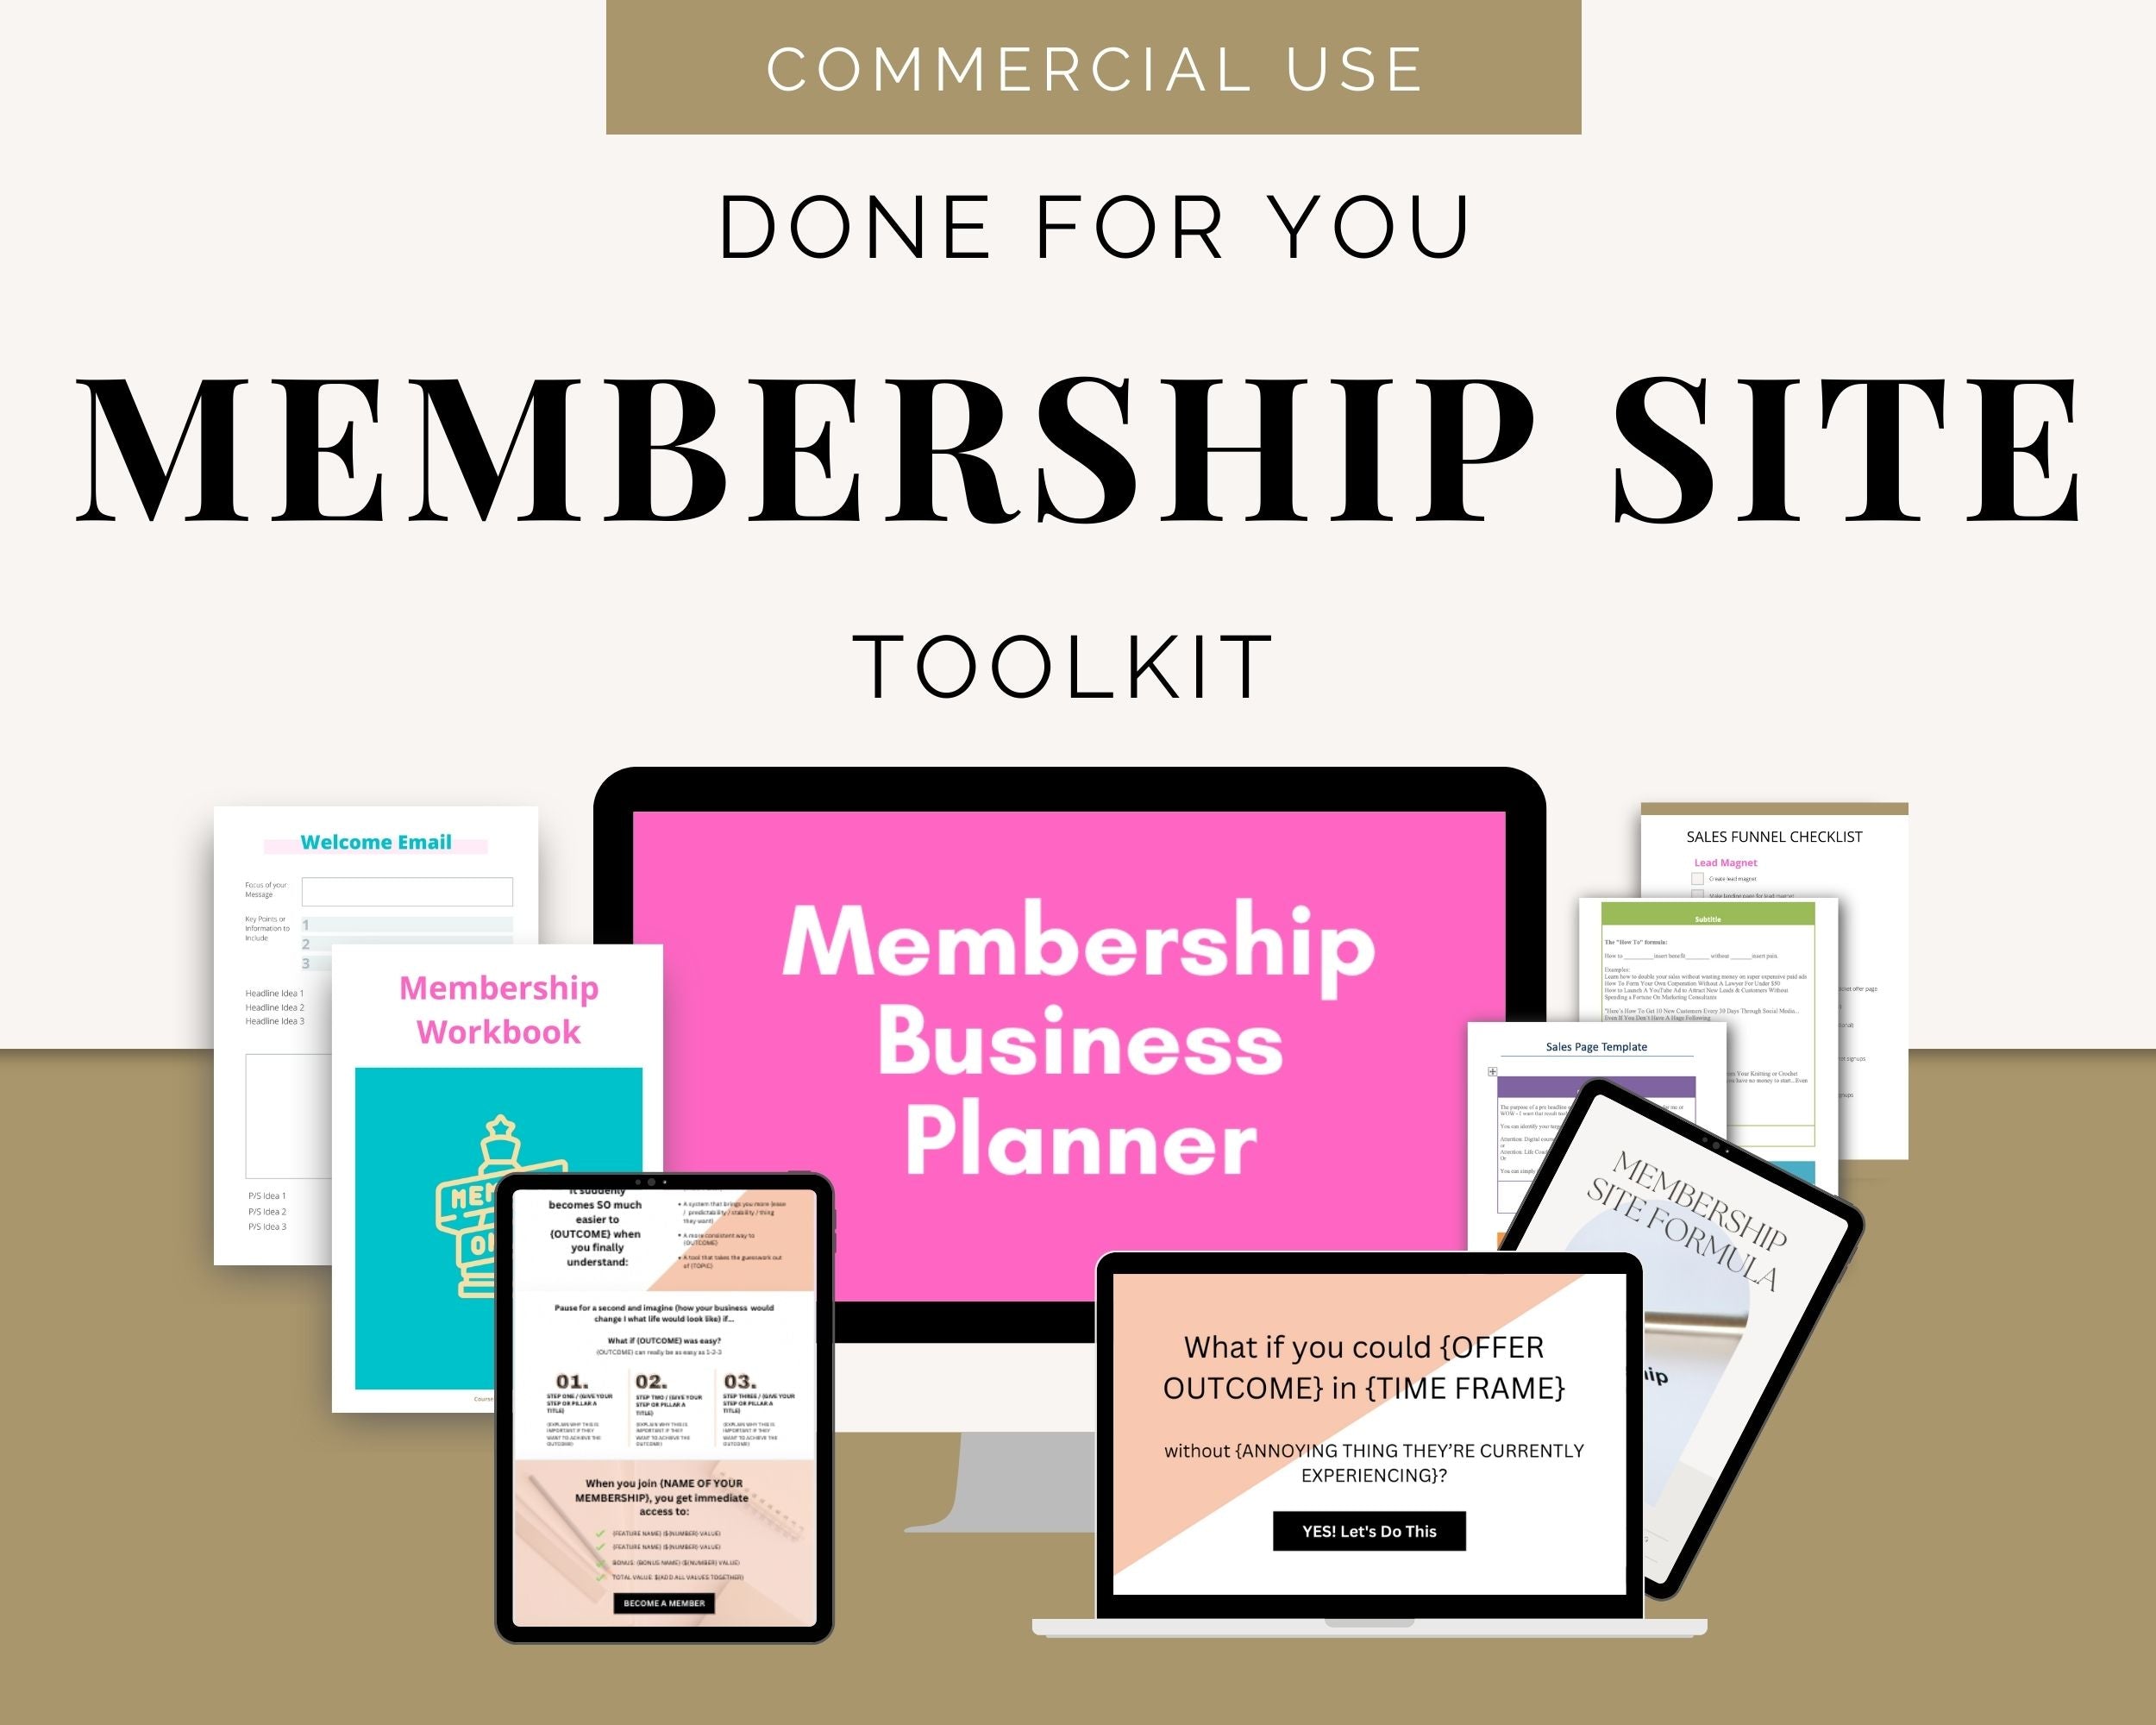 Membership Toolkit Courses | Business Planner | Membership Sales Copy Email Series